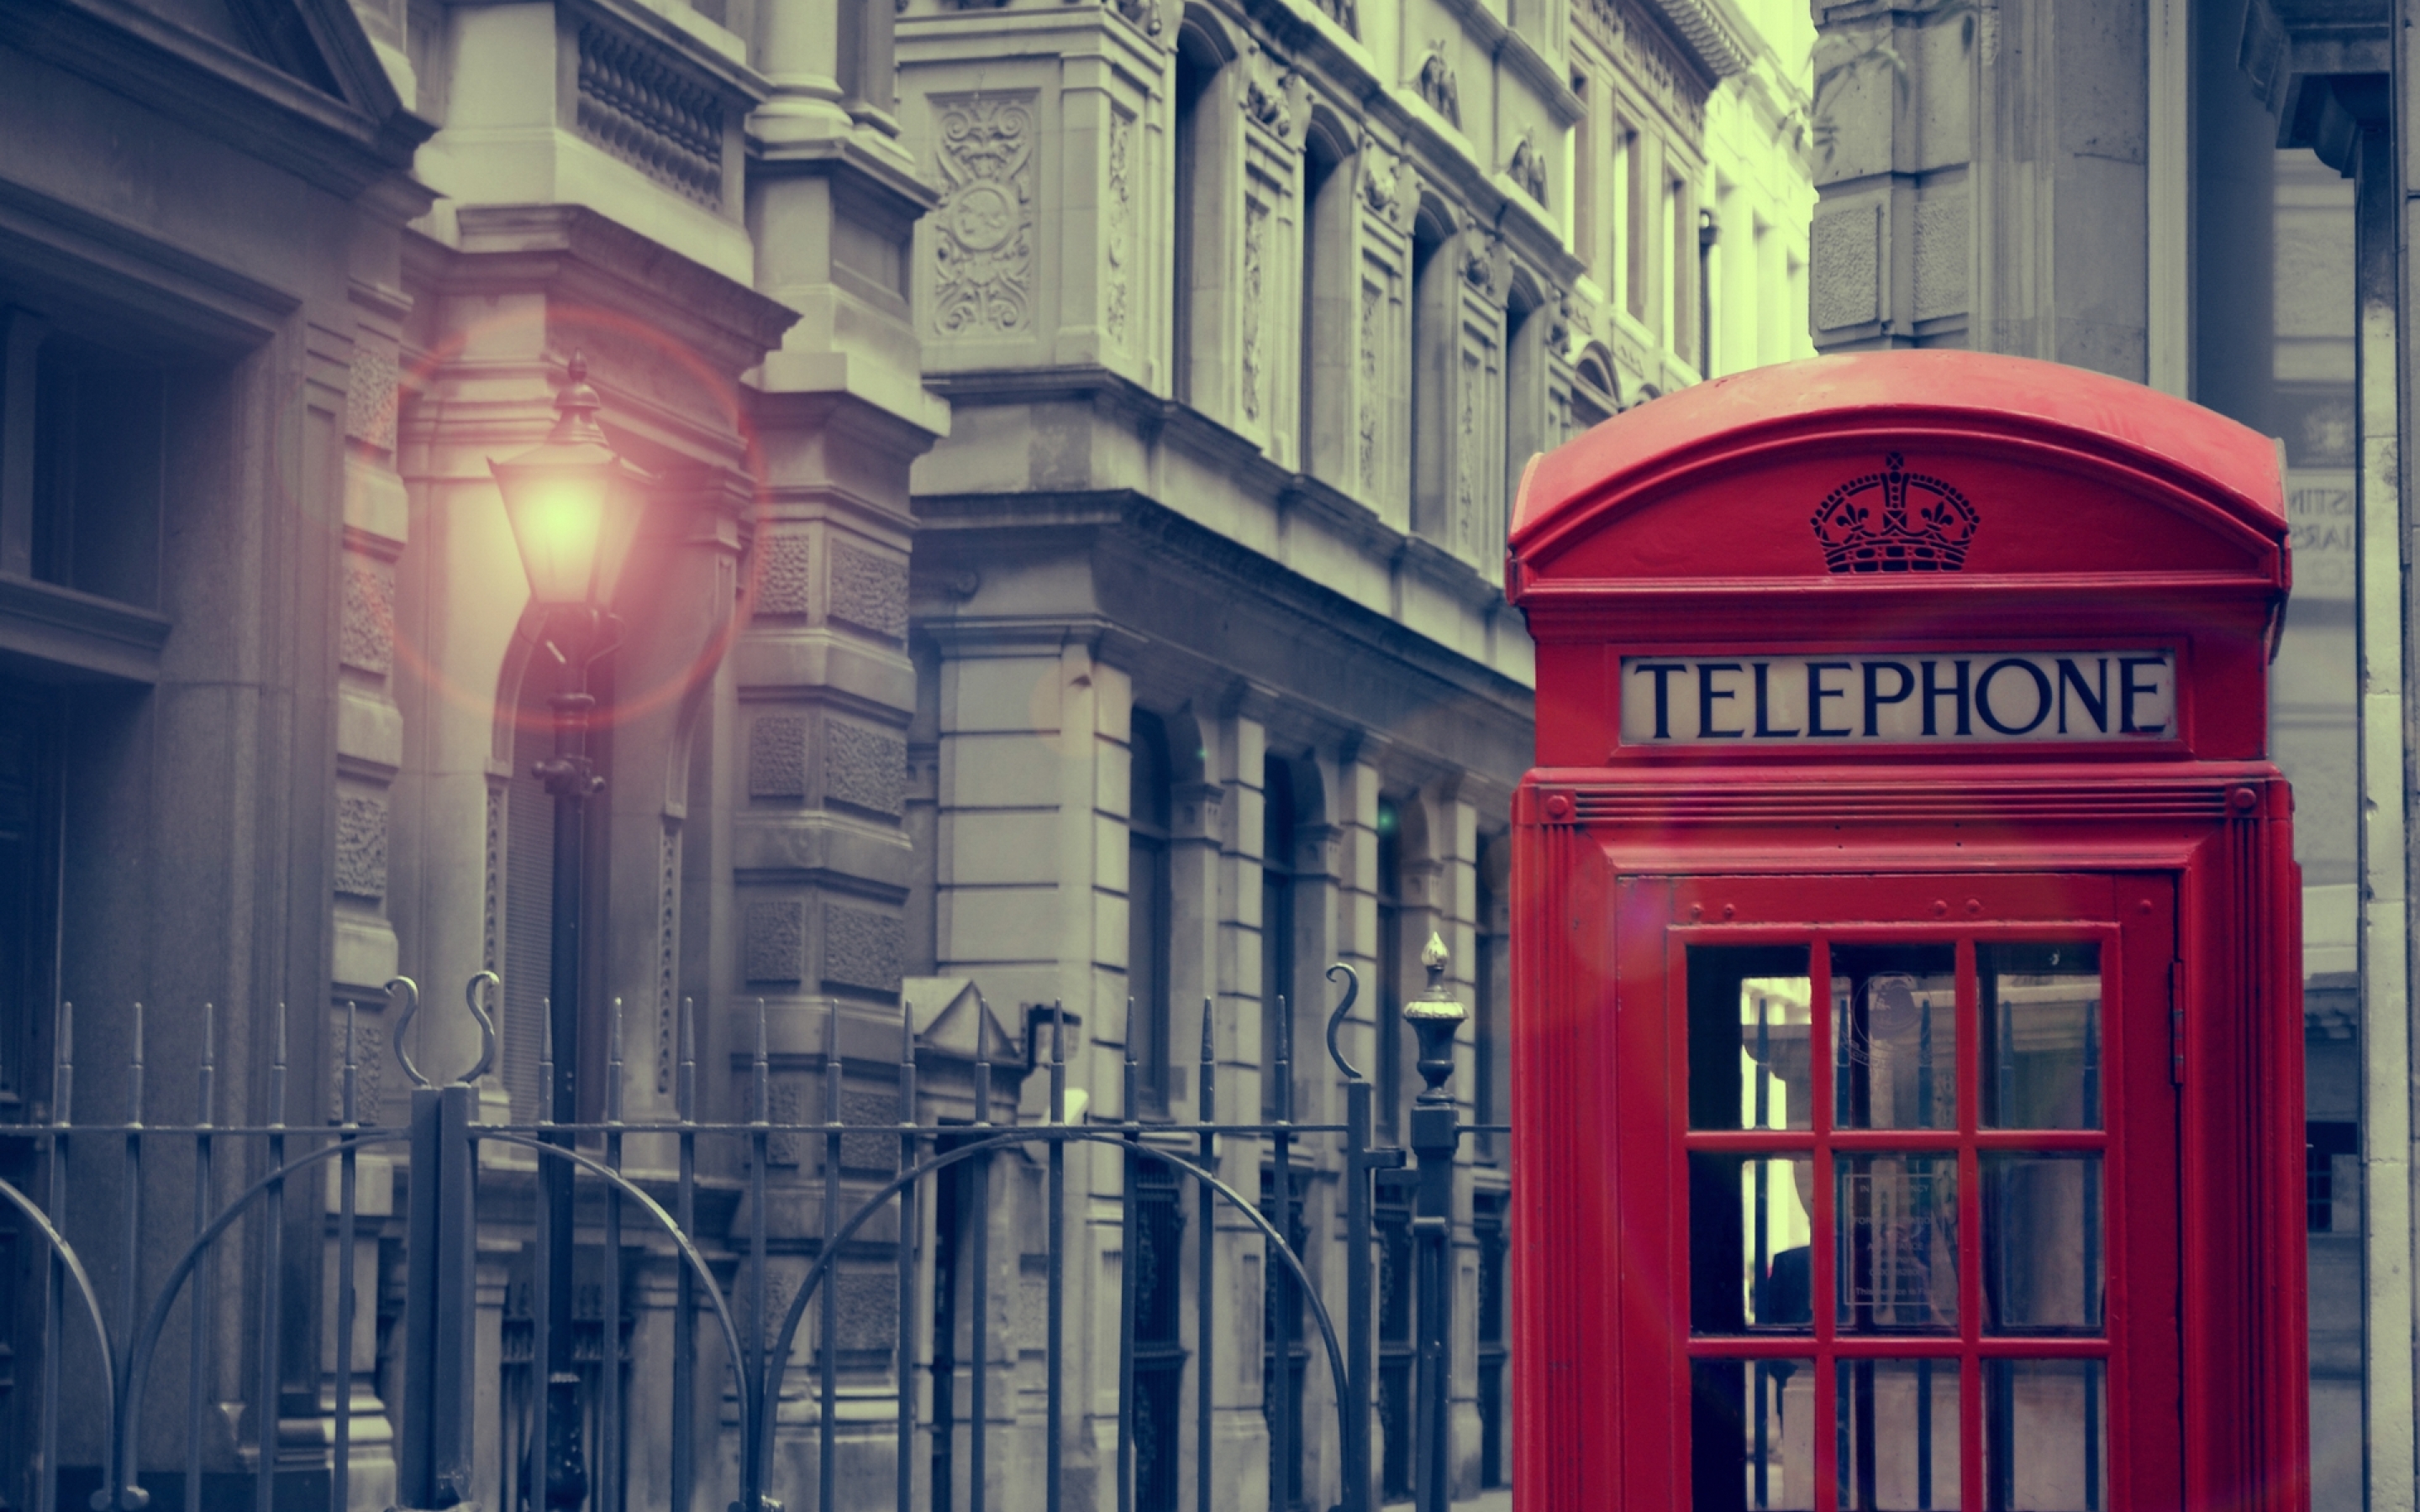 Обои на телефон с галереи. Телефонная будка Лондон. Красная телефонная будка в Лондоне. Англий телефонная будка Лондон. Лондон телефоная Бутка.